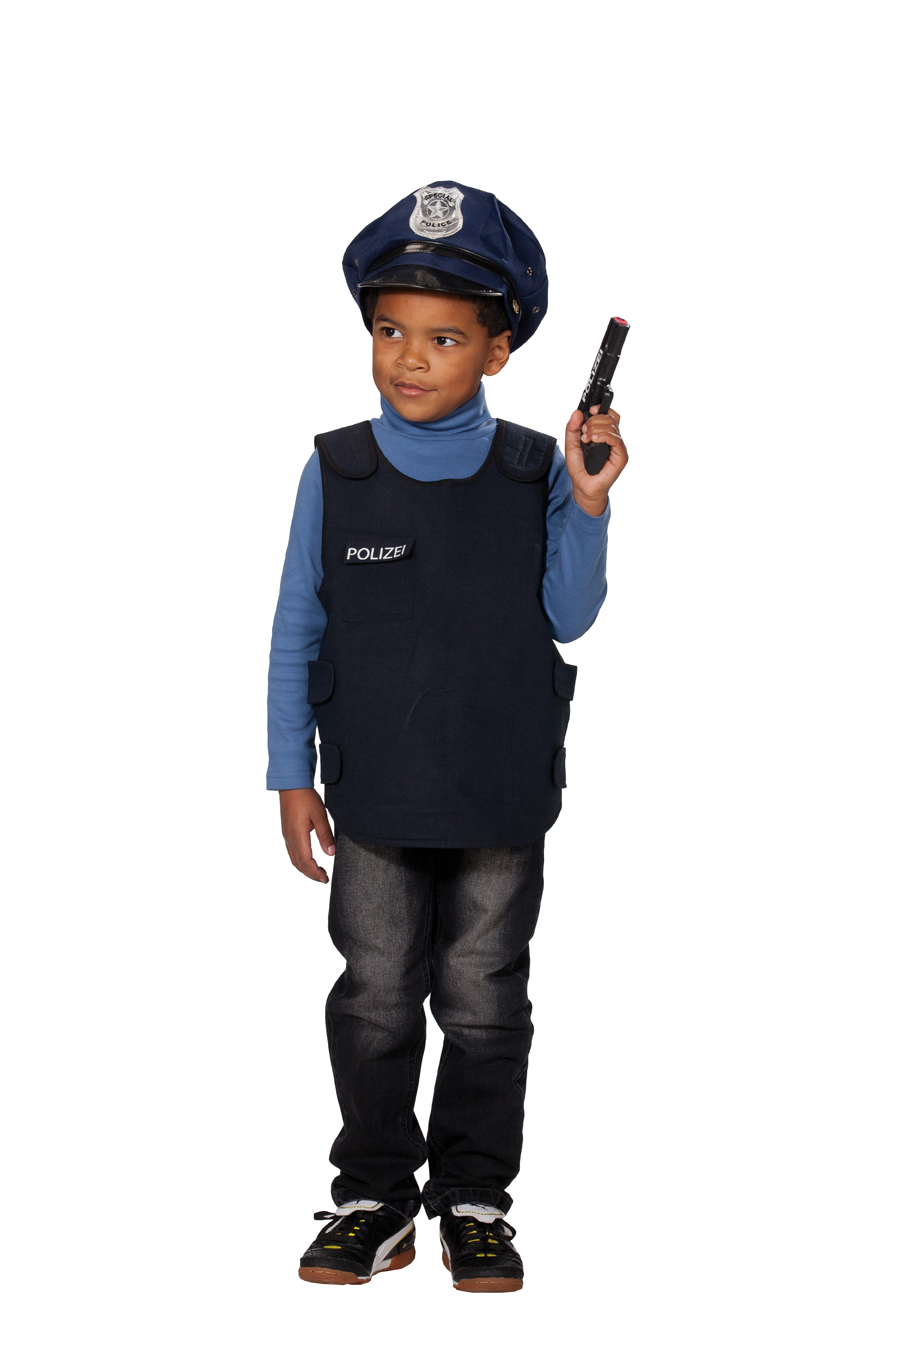 karneval kinder kostüm kugelsichere polizei weste